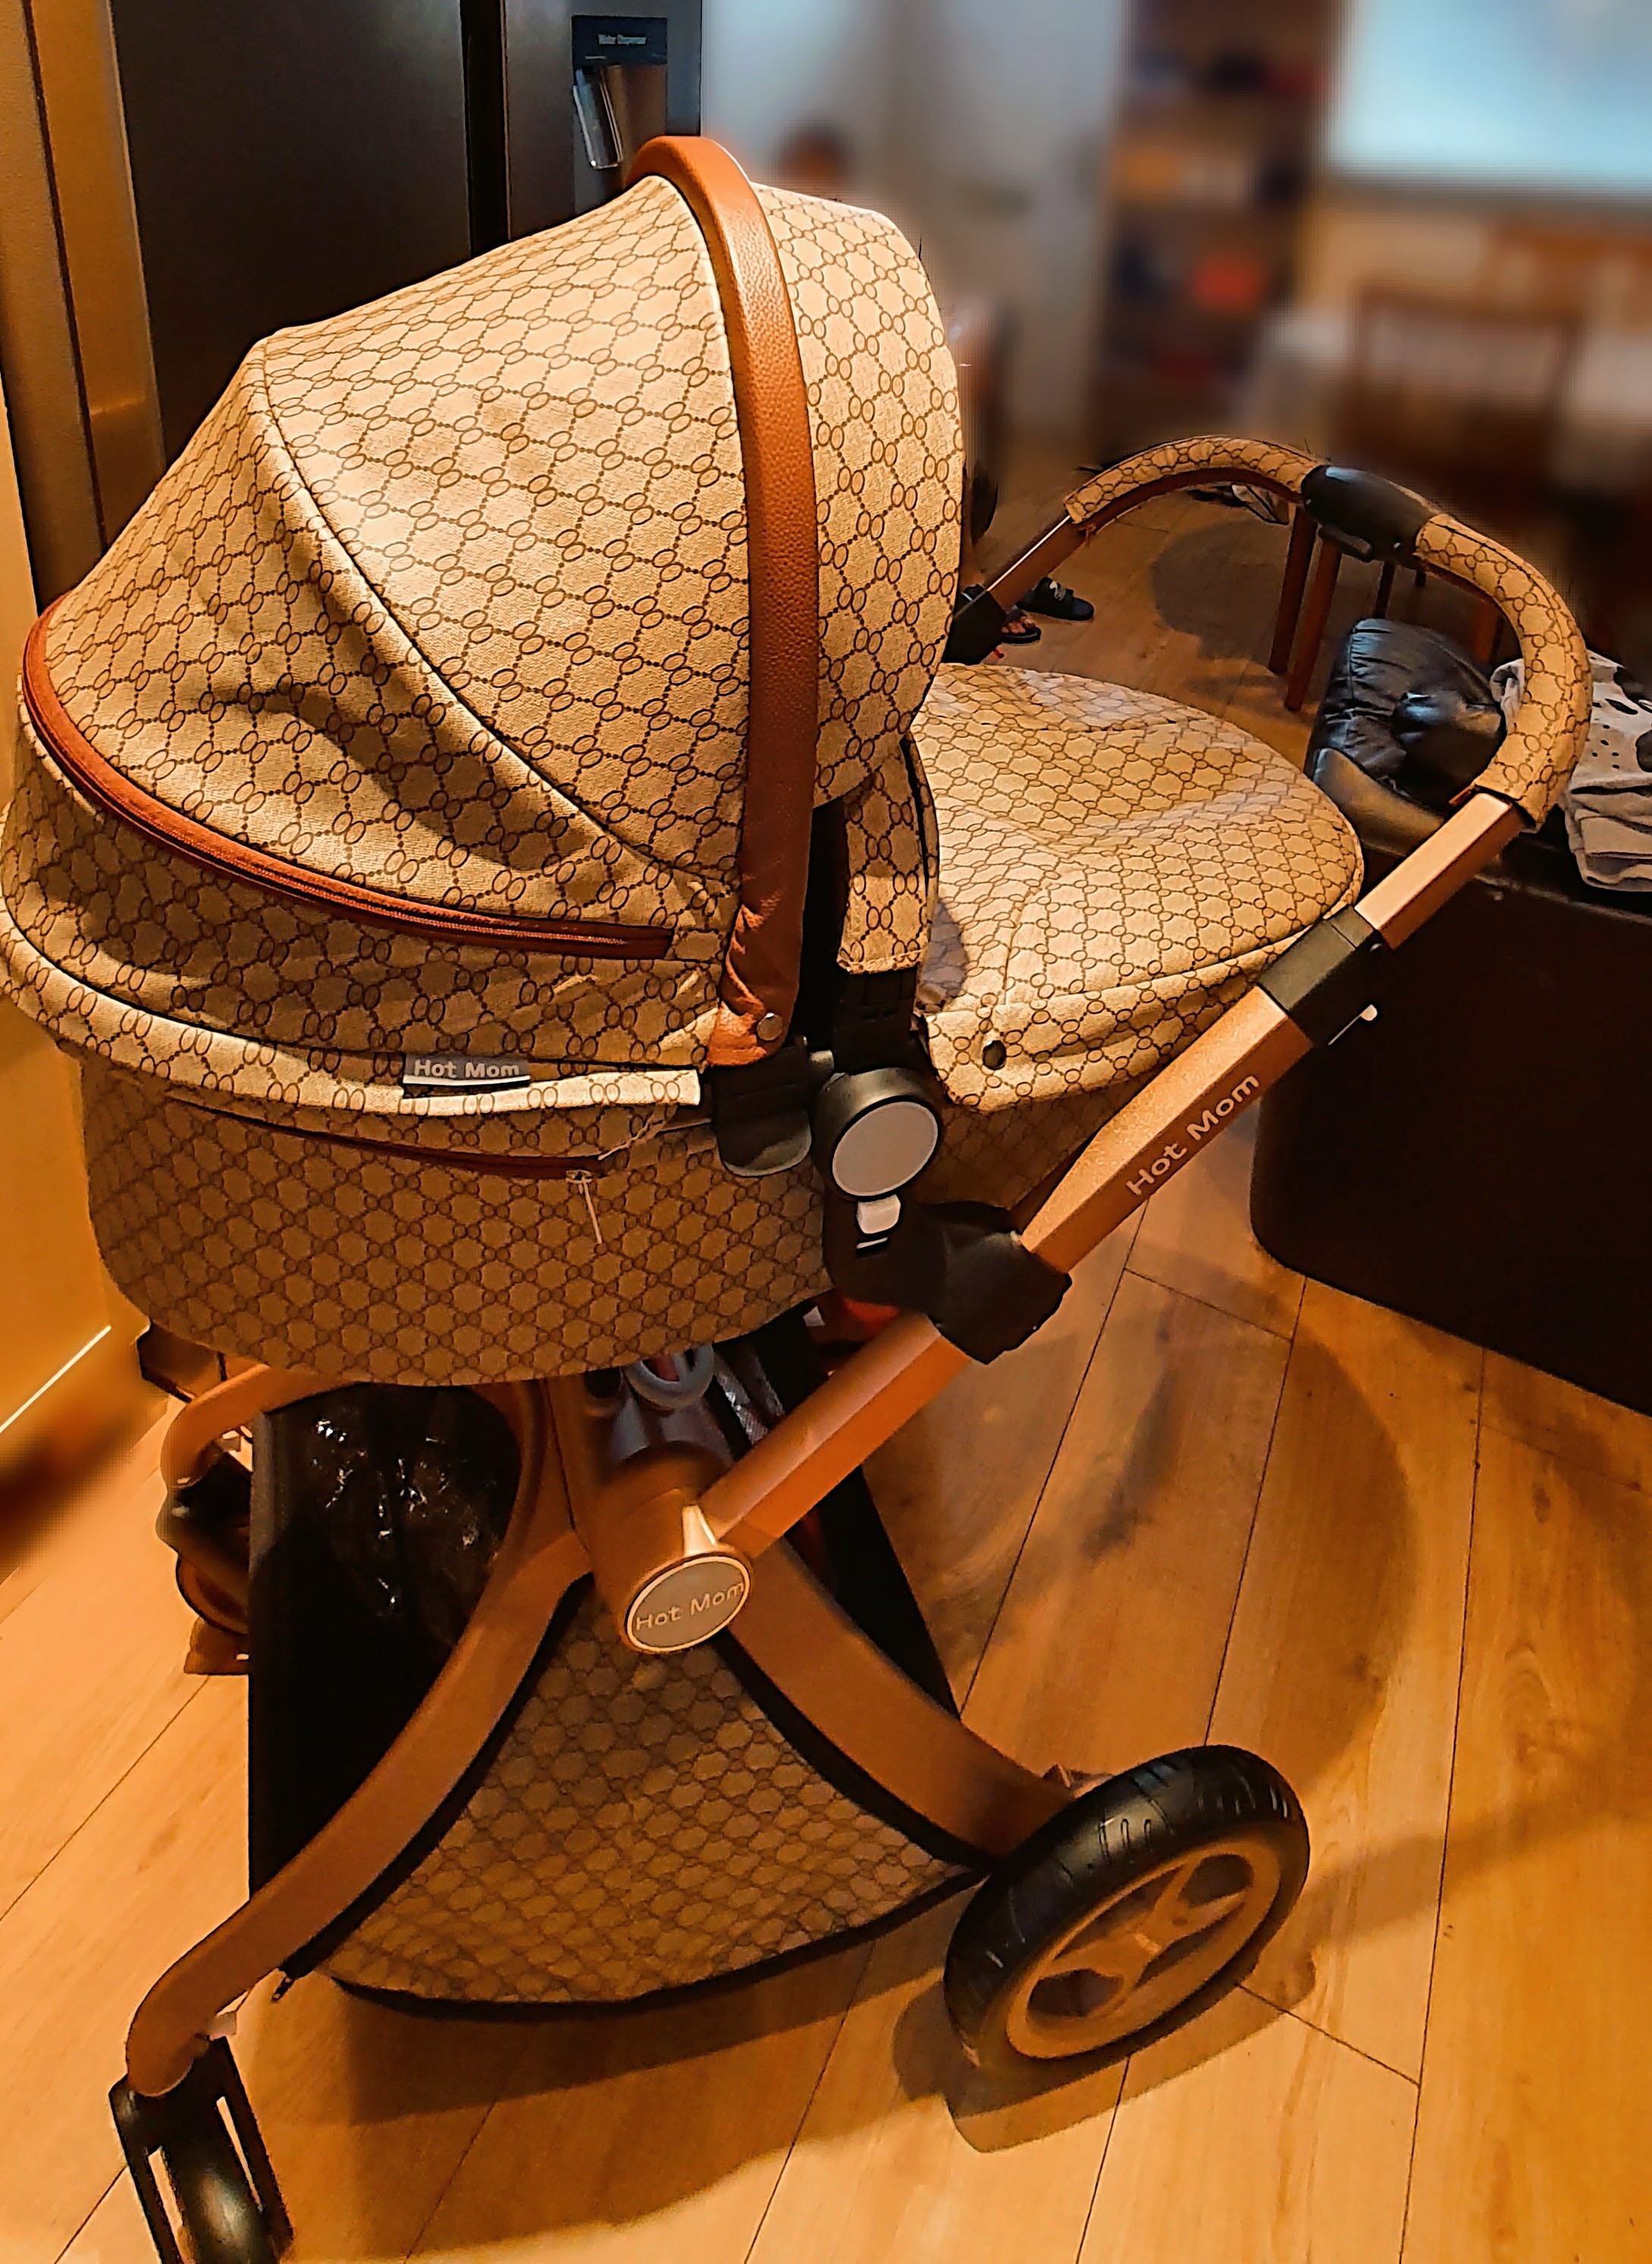 eeGee - Hot Mom - Elegance F022 - 2 in 1 Baby Stroller - Grid